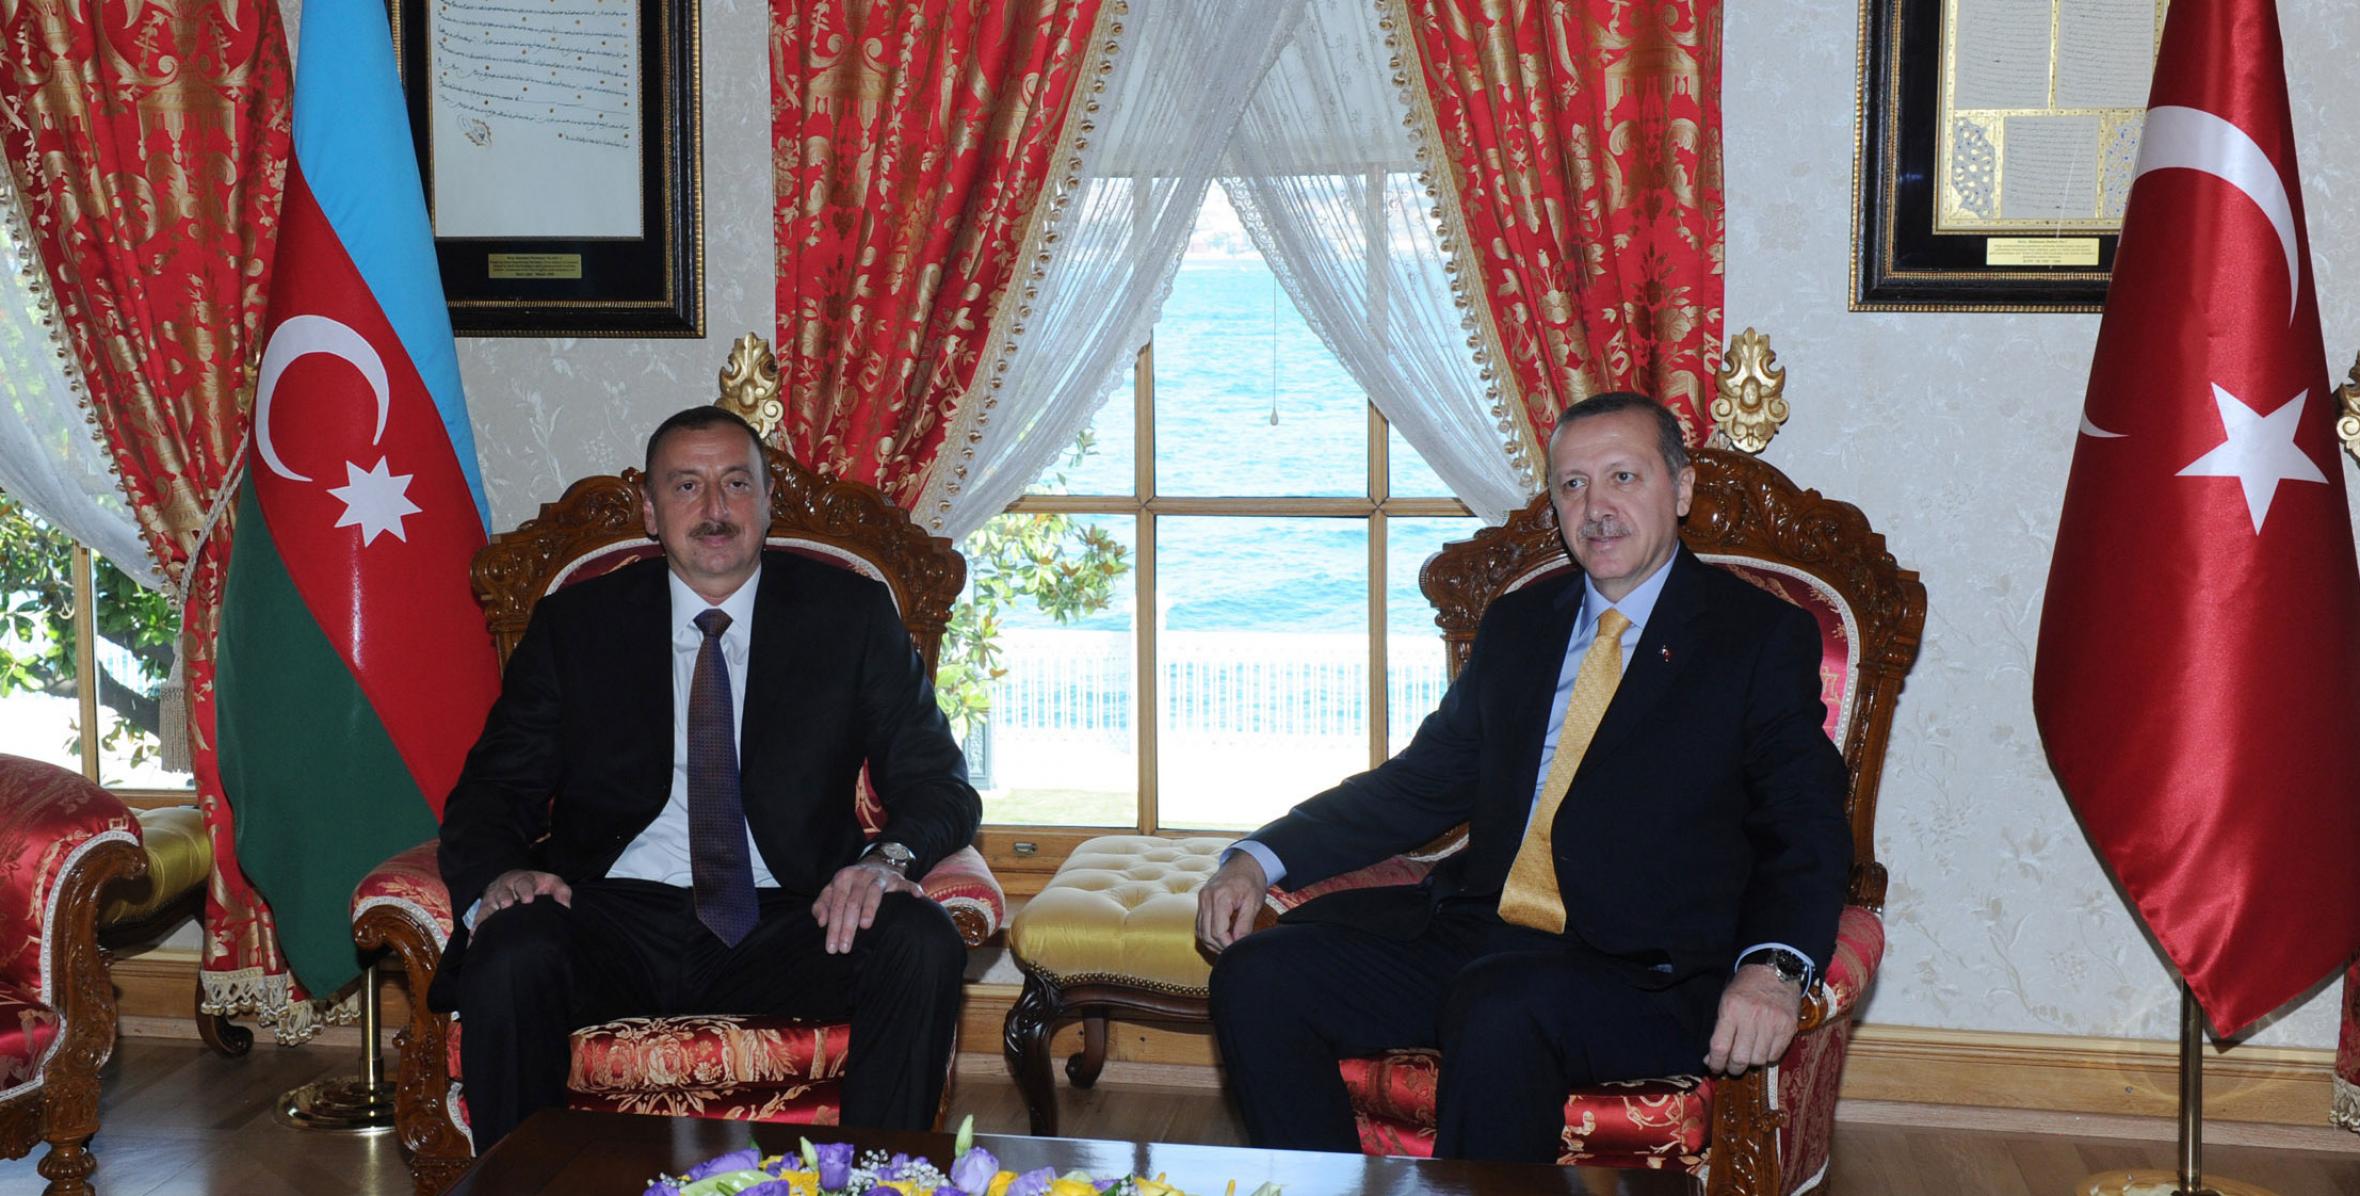 Ilham Aliyev met with Turkish Prime Minister Recep Tayyip Erdogan in Istanbul